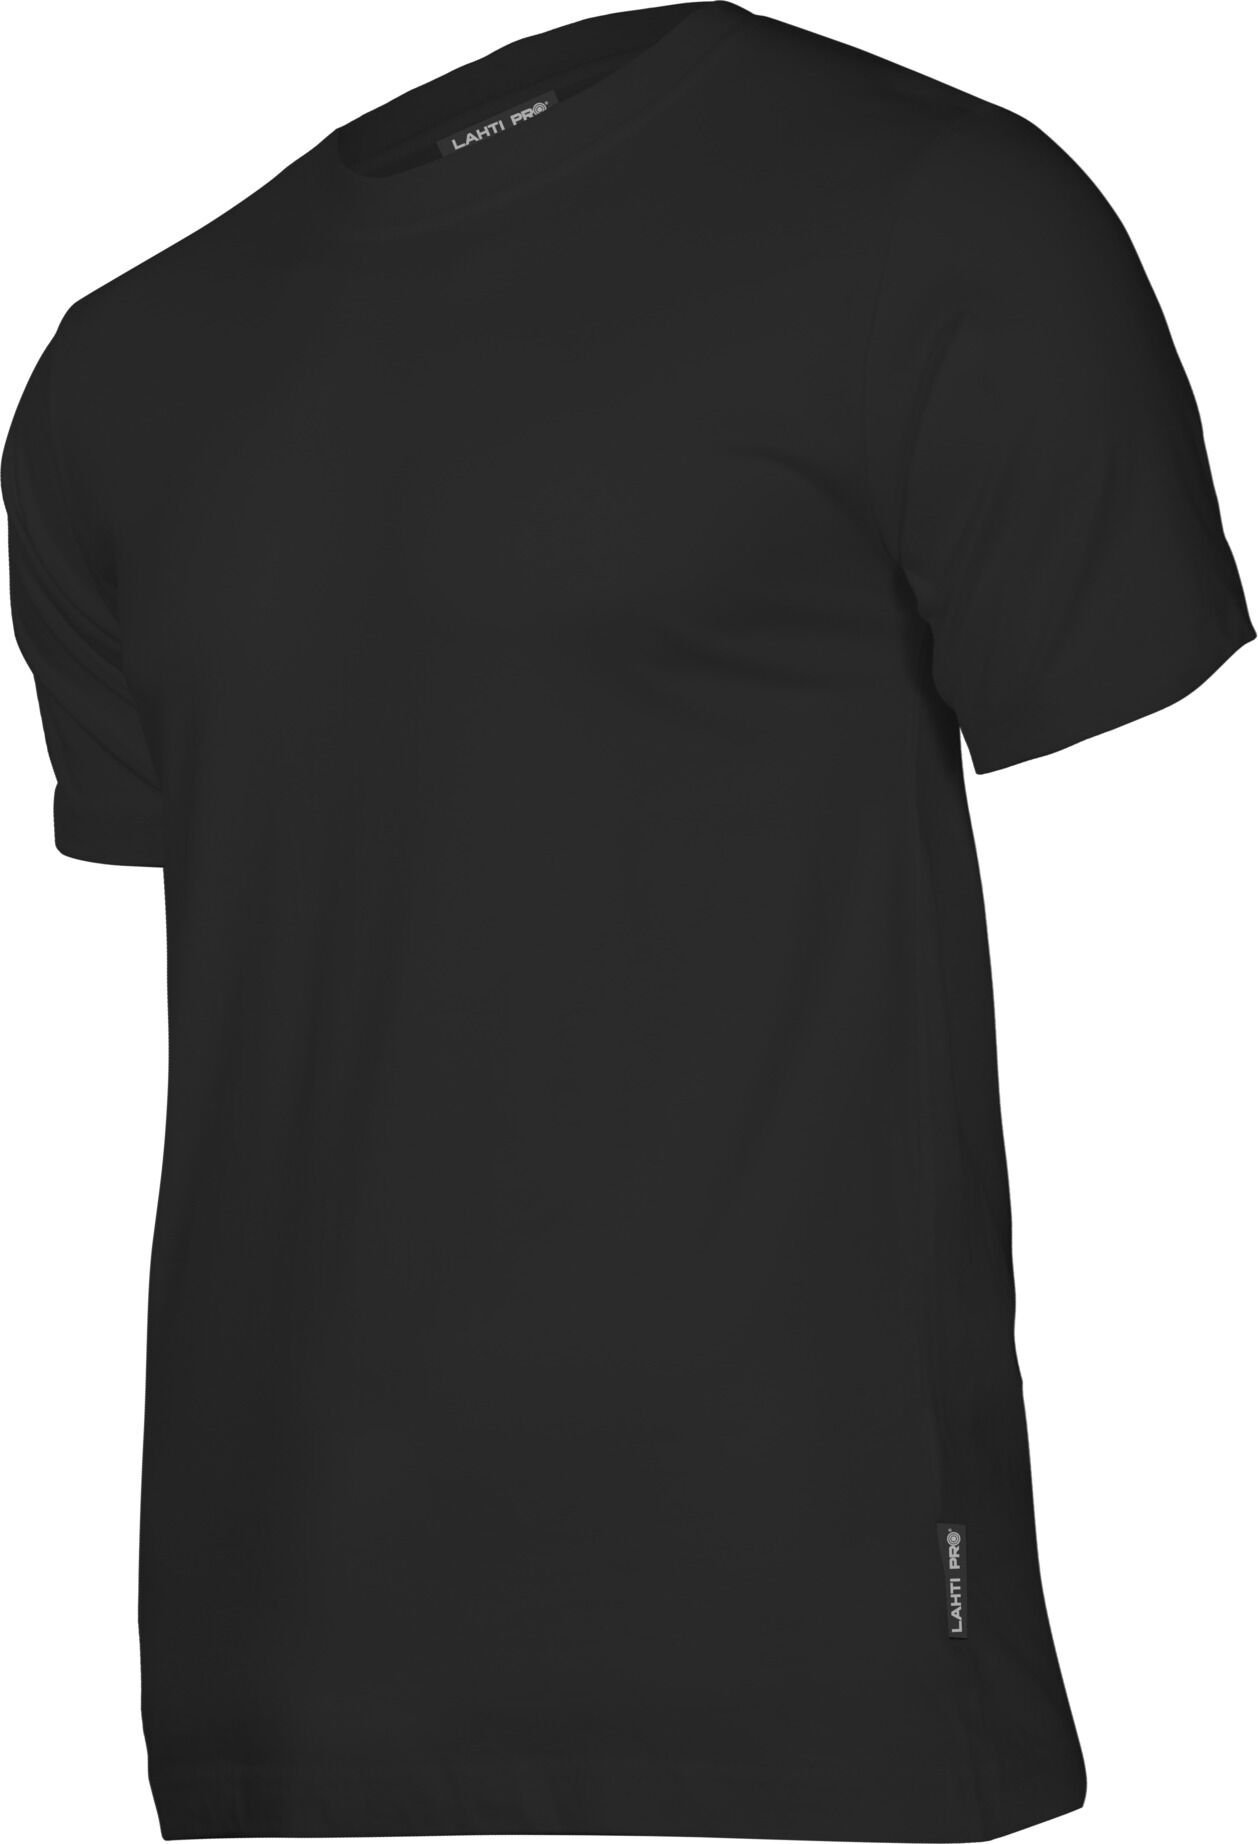 Lahti Pro Koszulka t-shirt 190g/m2, czarna, 